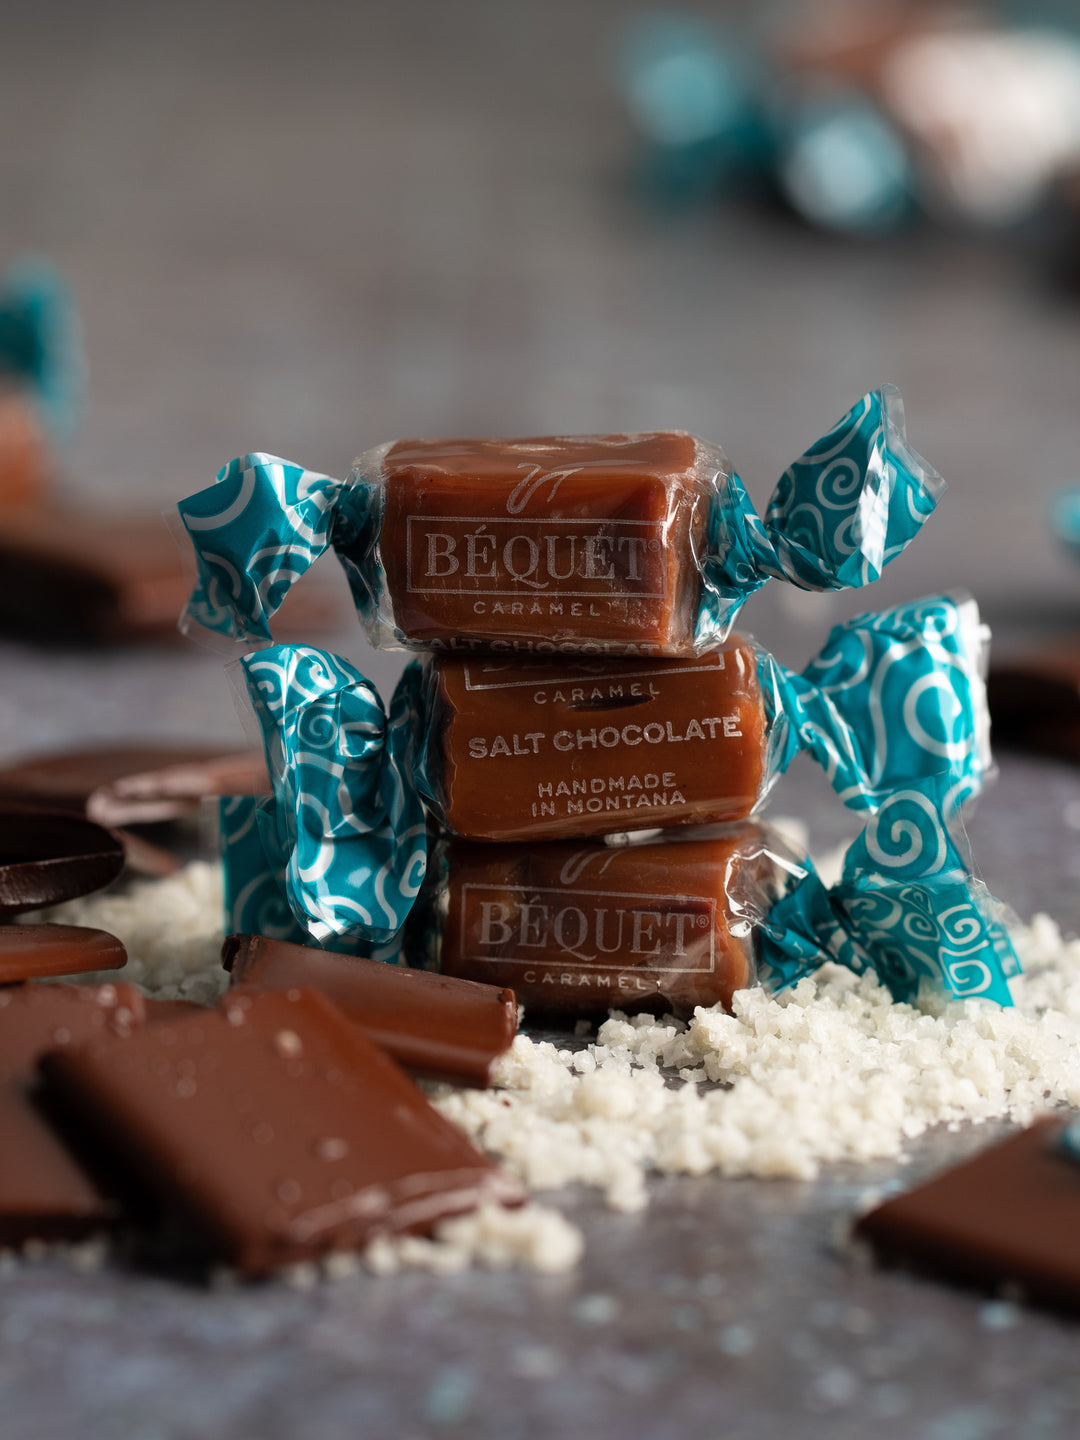 salt-chocolate bequet caramel#caramel-variety_salt-chocolate